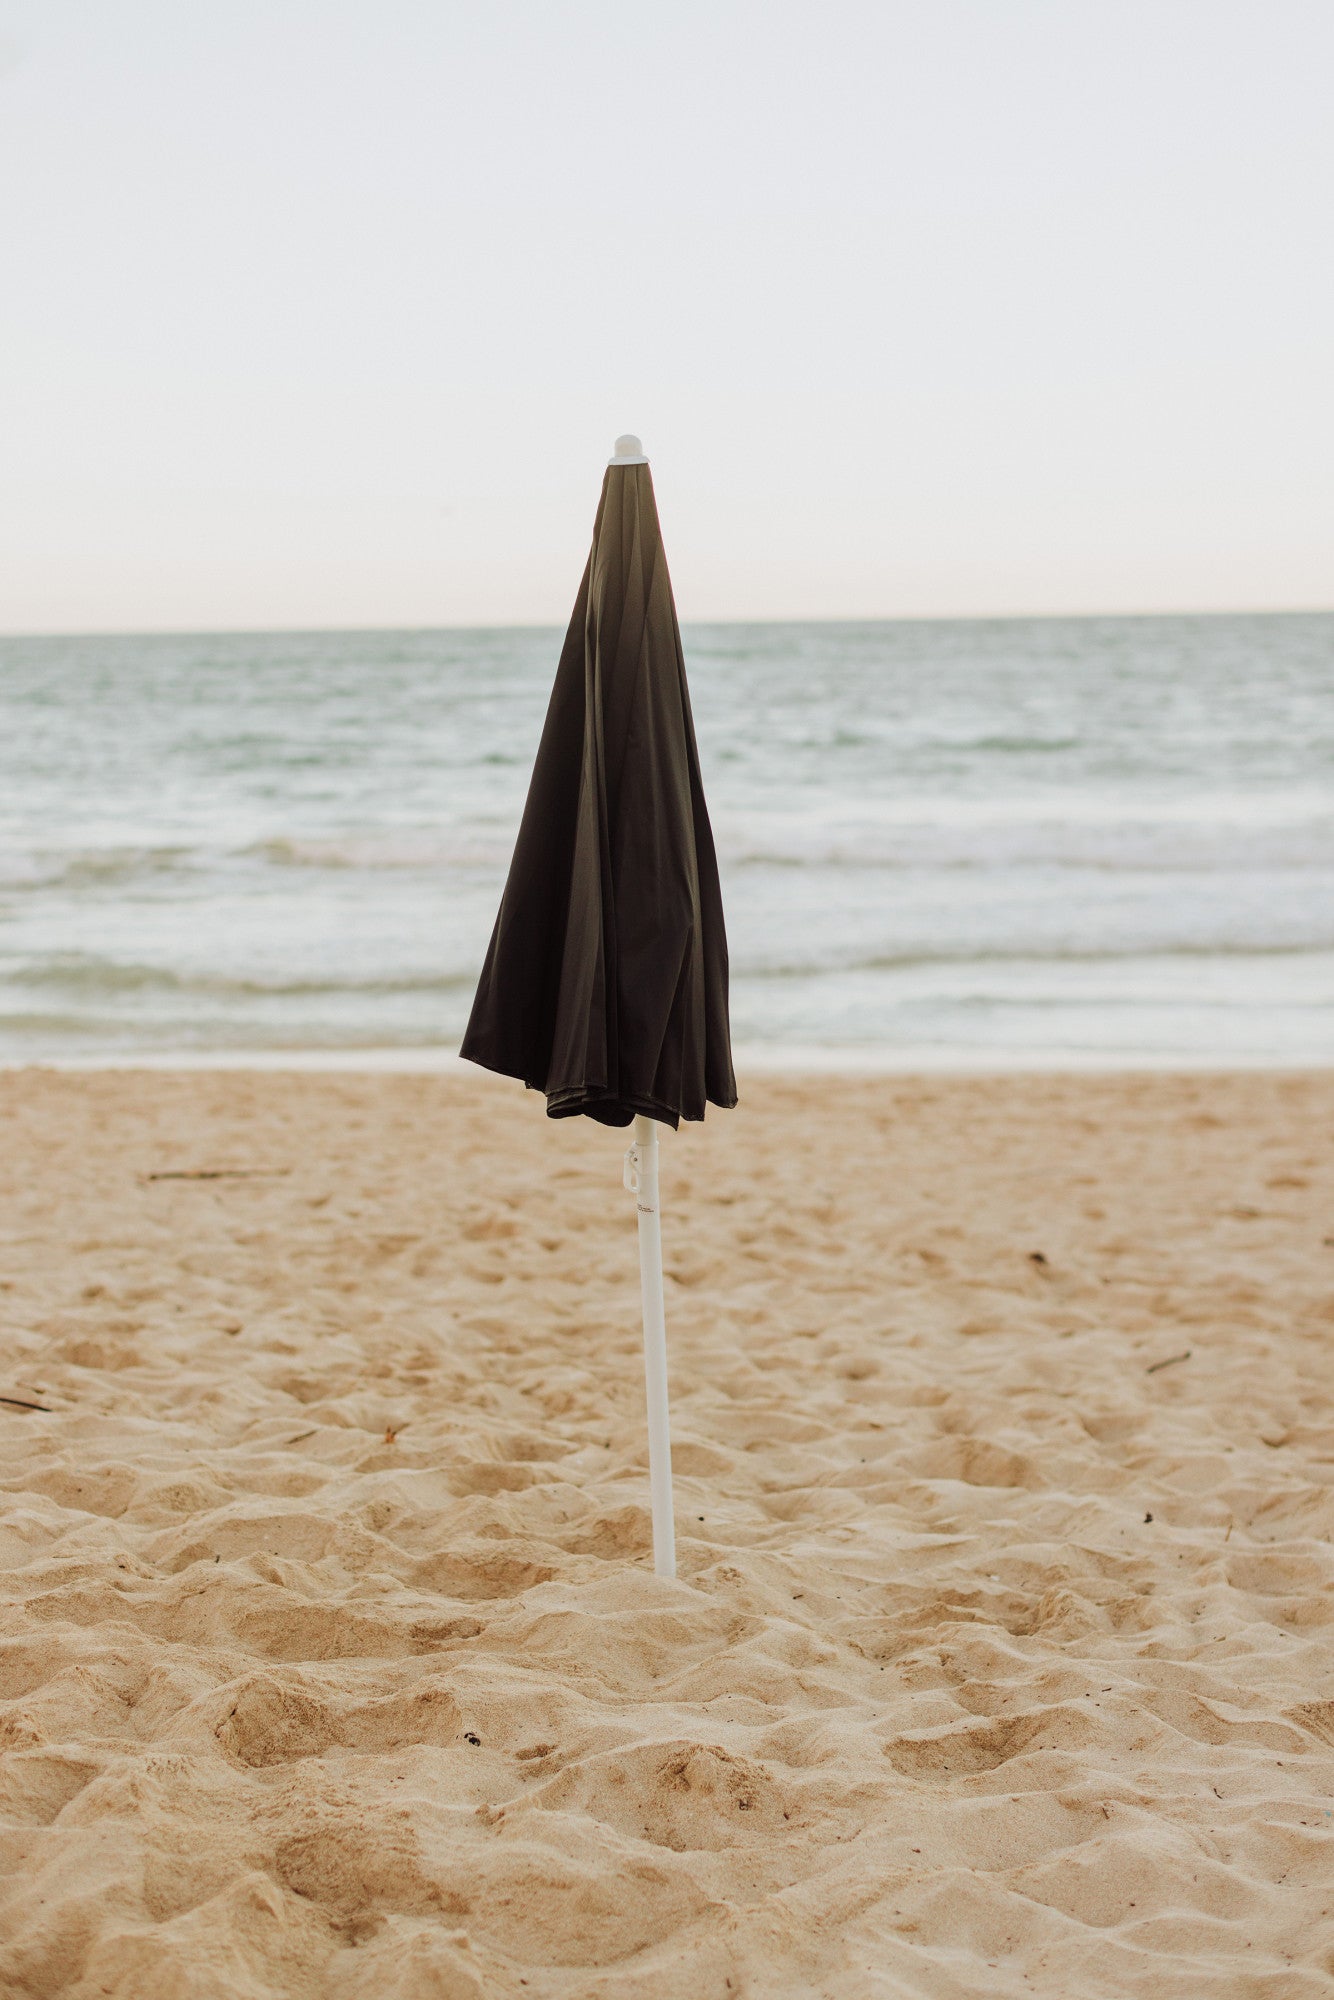 Oklahoma State Cowboys - 5.5 Ft. Portable Beach Umbrella